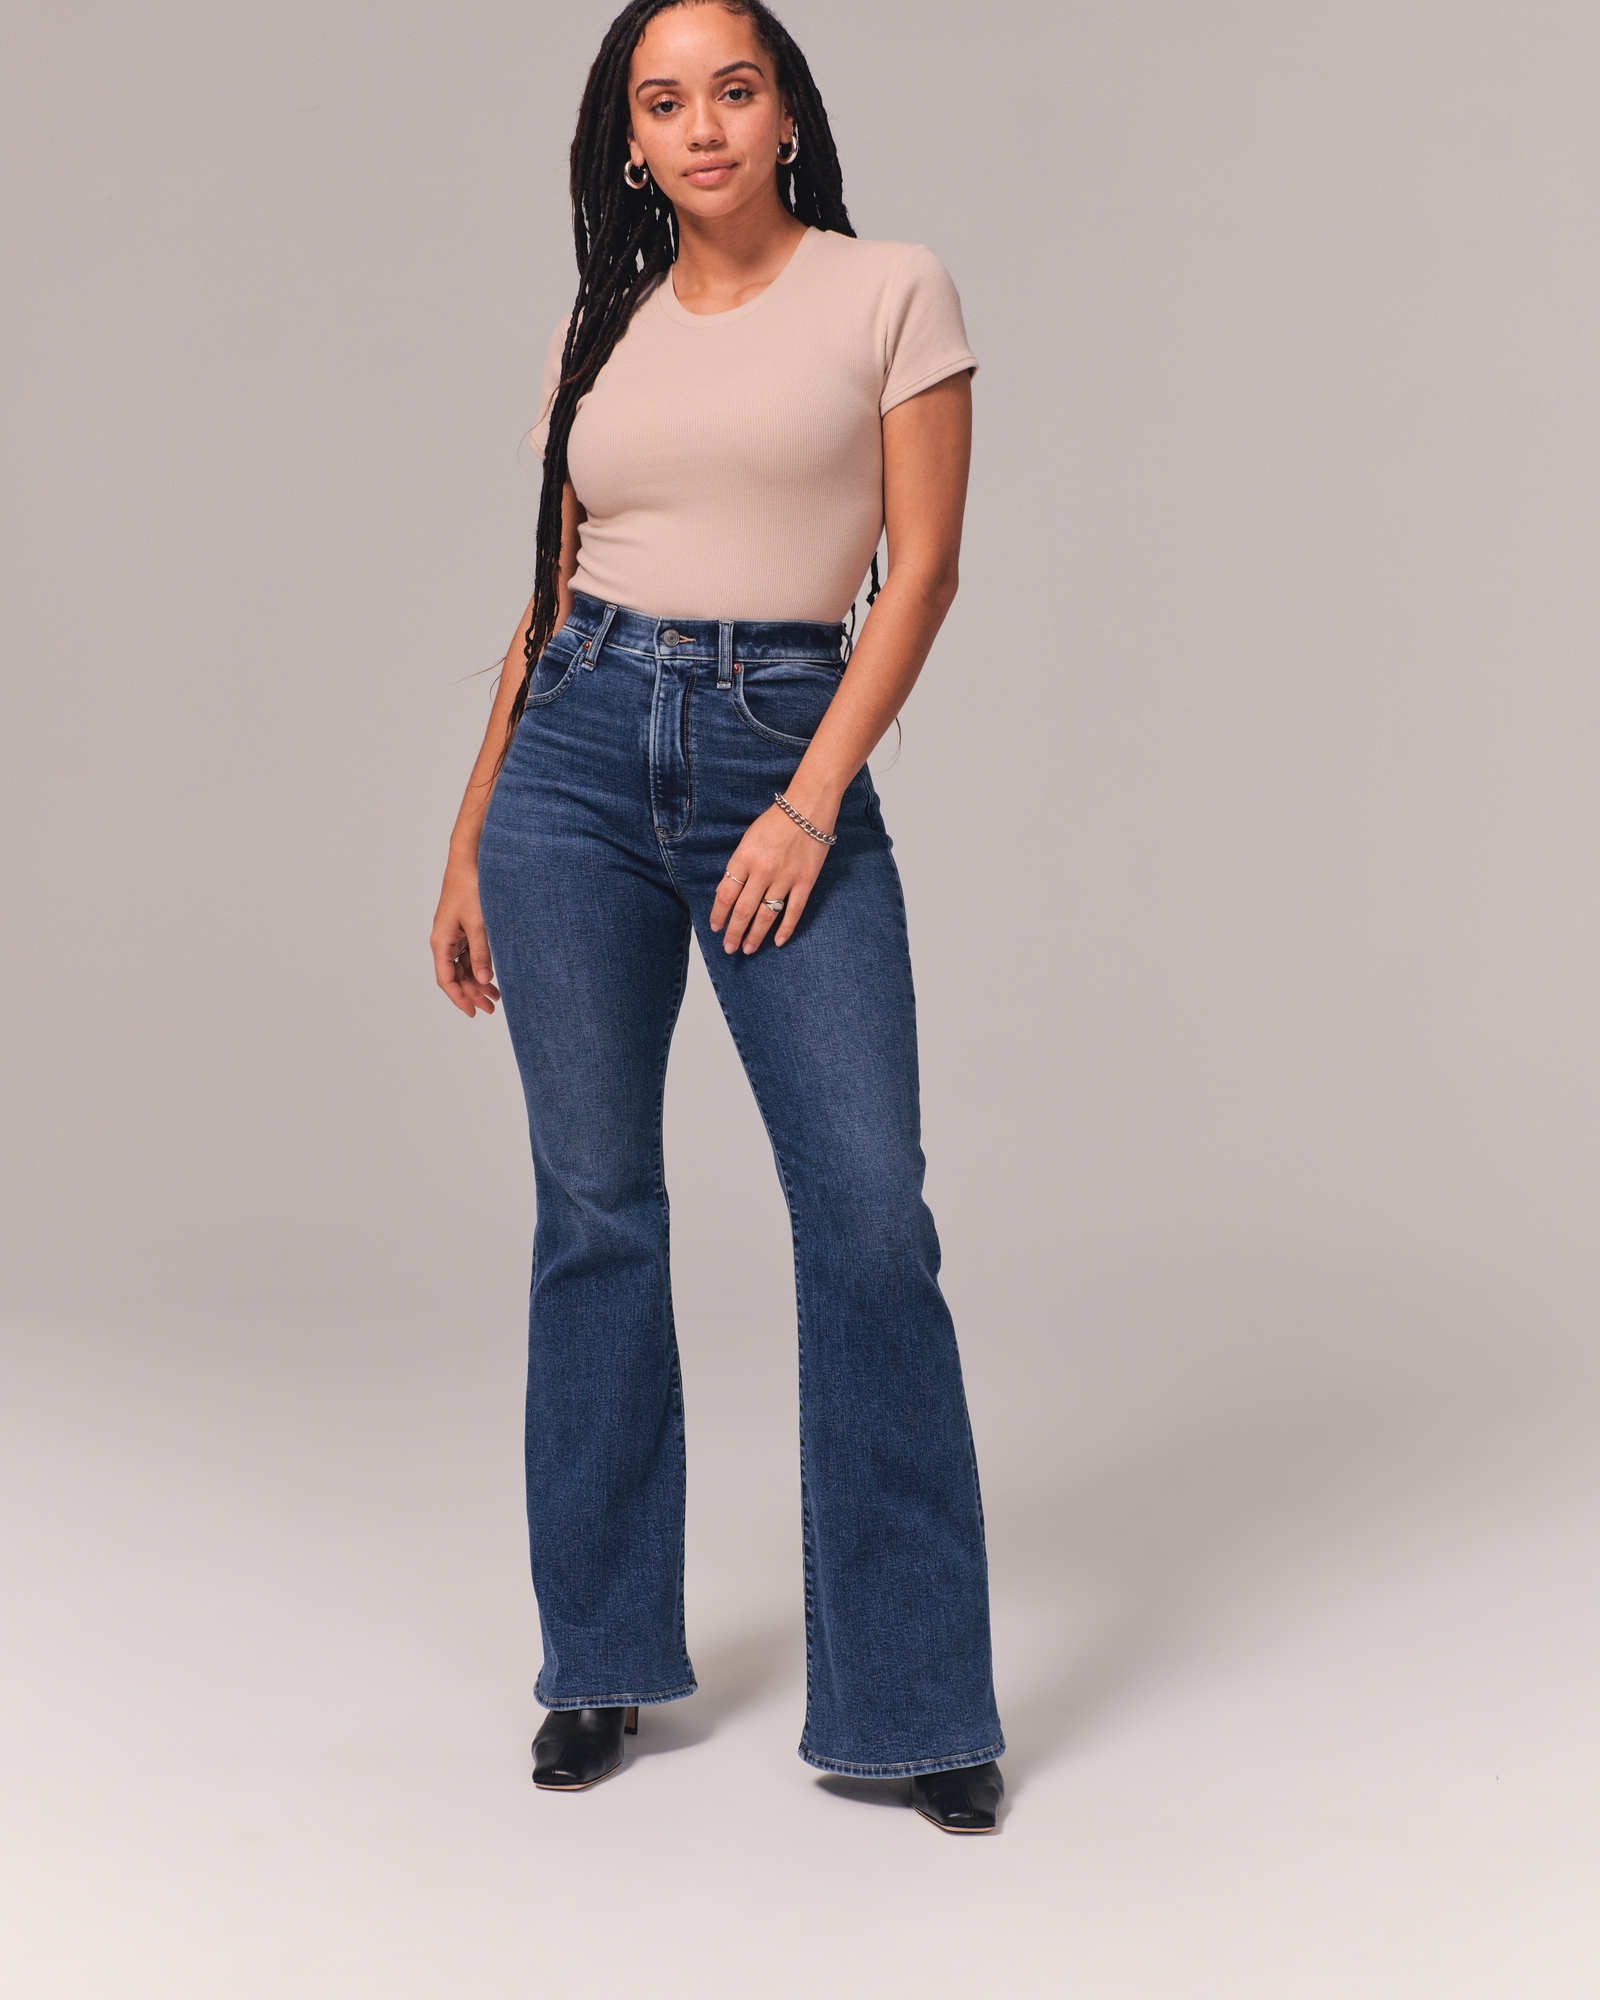 CLARA Curve super stretch slim fit jeans with high waist Light denim